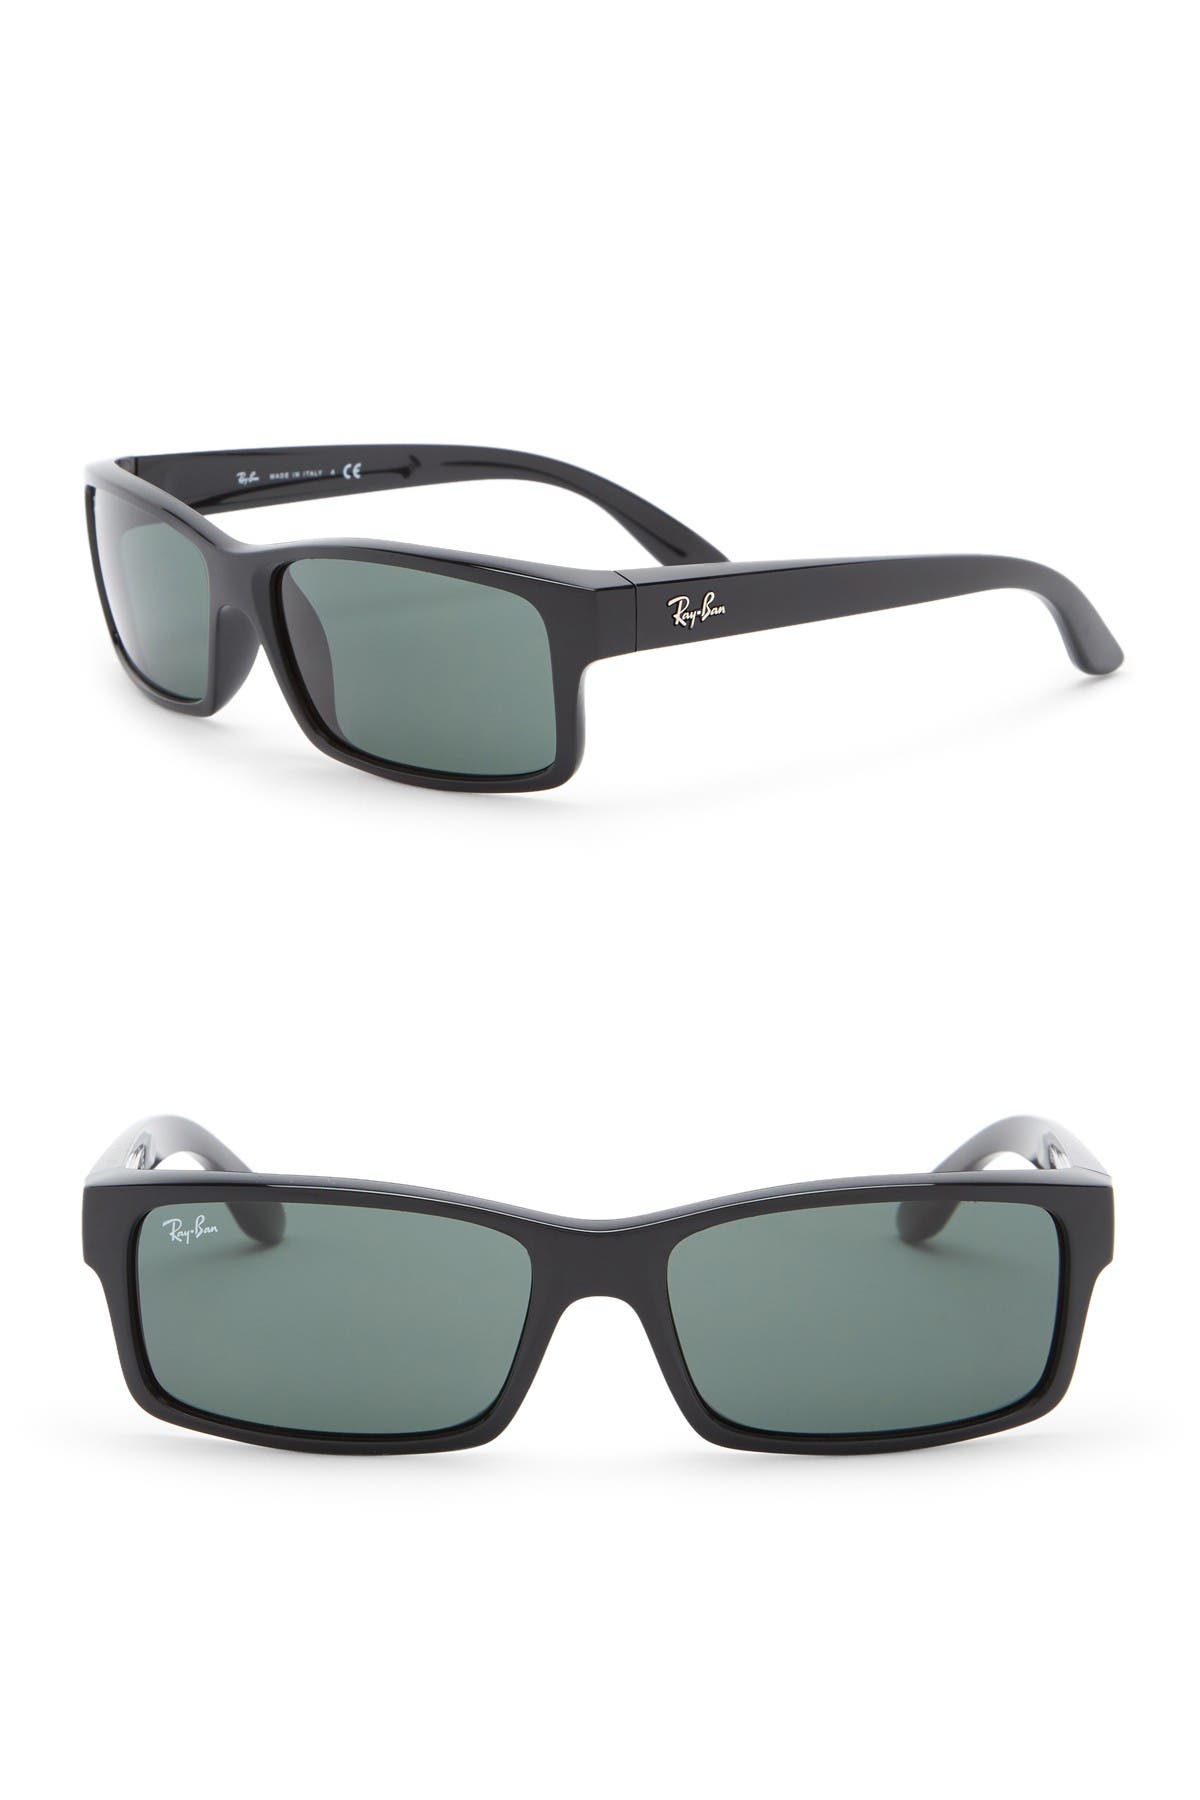 ray ban rectangular frame sunglasses